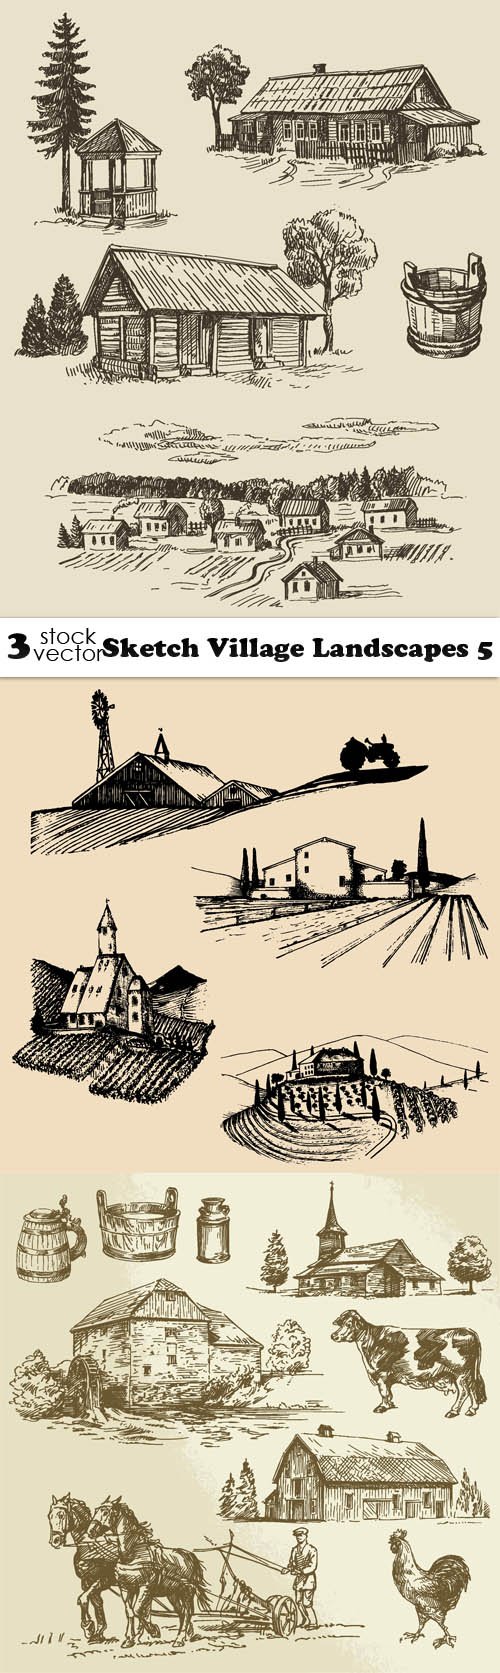 Vectors - Sketch Village Landscapes 5